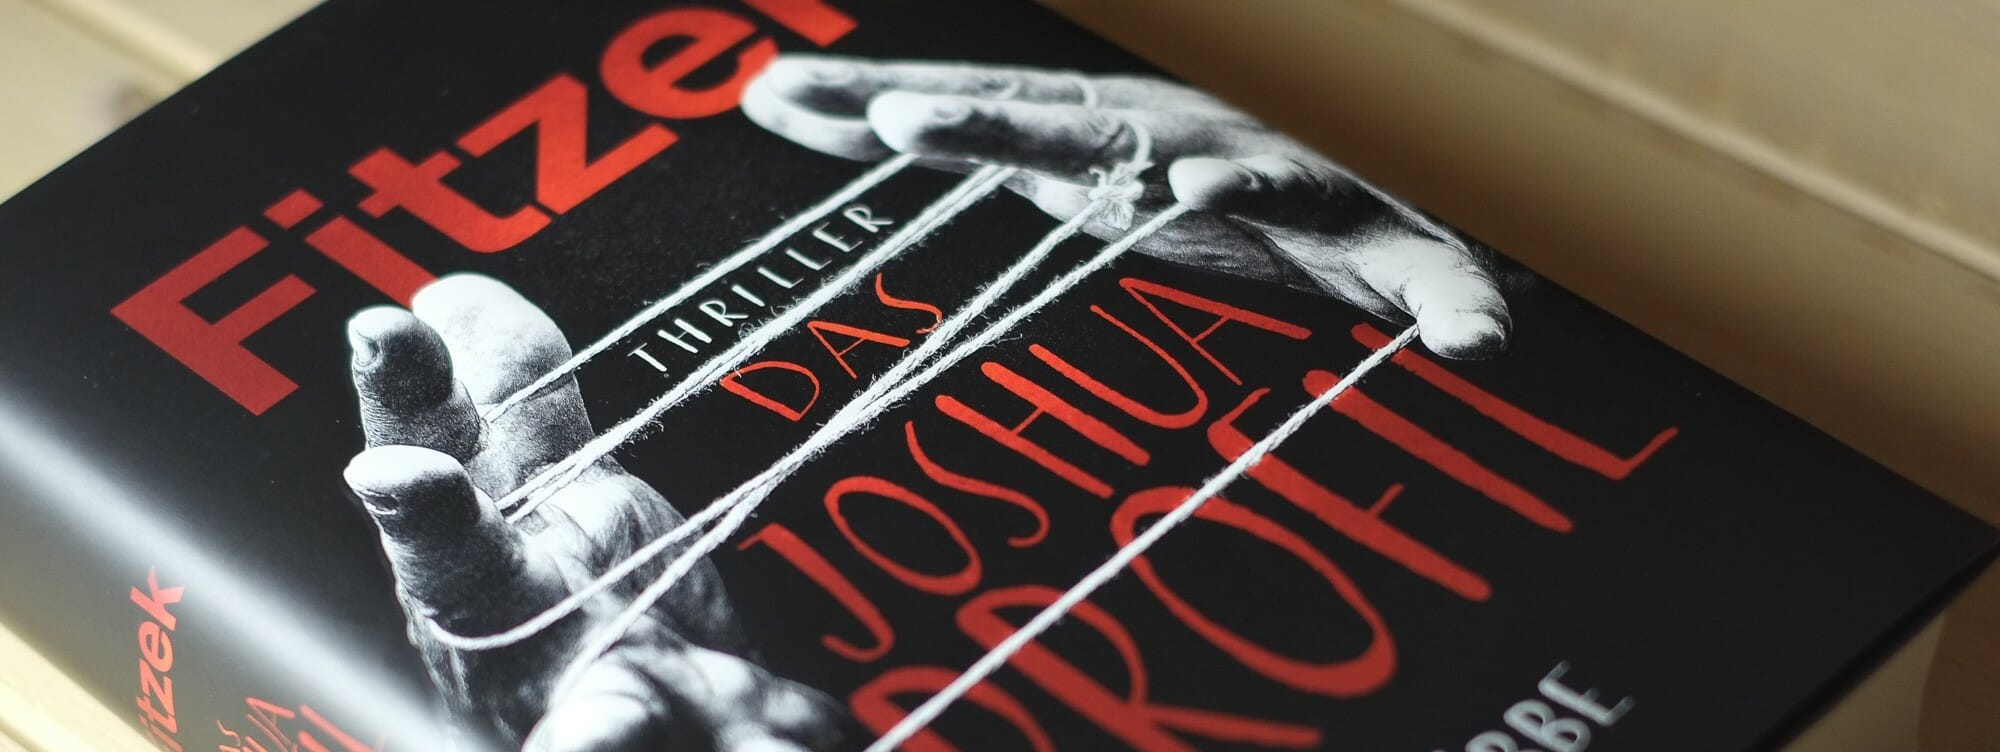 Buch: Das Joshua-Profil von Sebastian Fitzek (Foto: Duval)